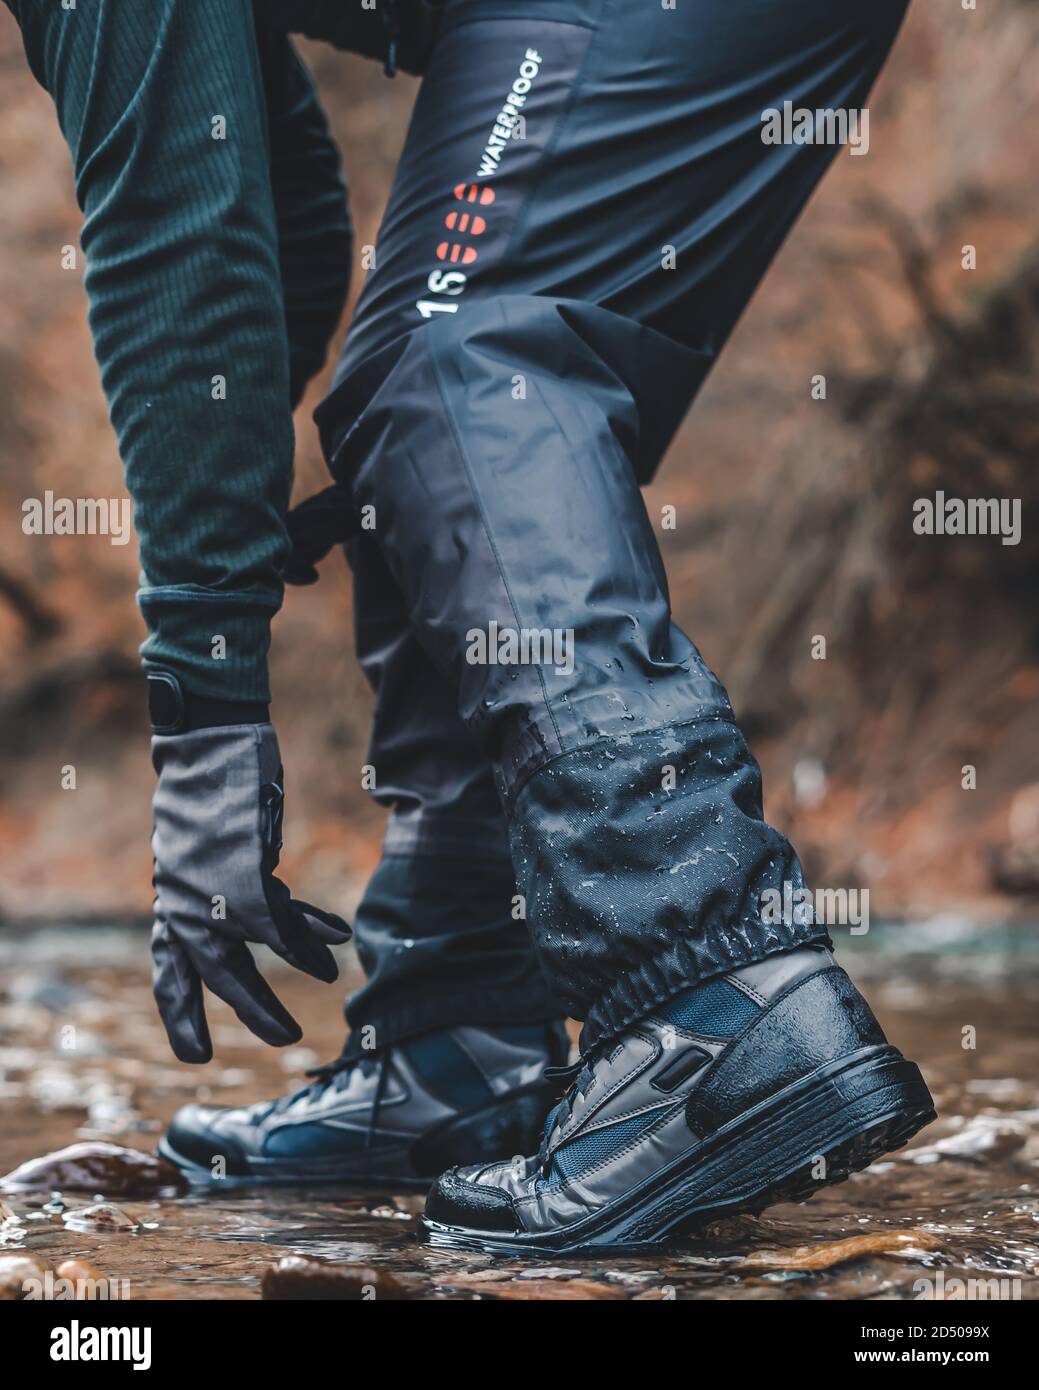 Stivali da pesca per guado nel fiume, guanti da pesca impermeabili, scarpe  da vicino Foto stock - Alamy